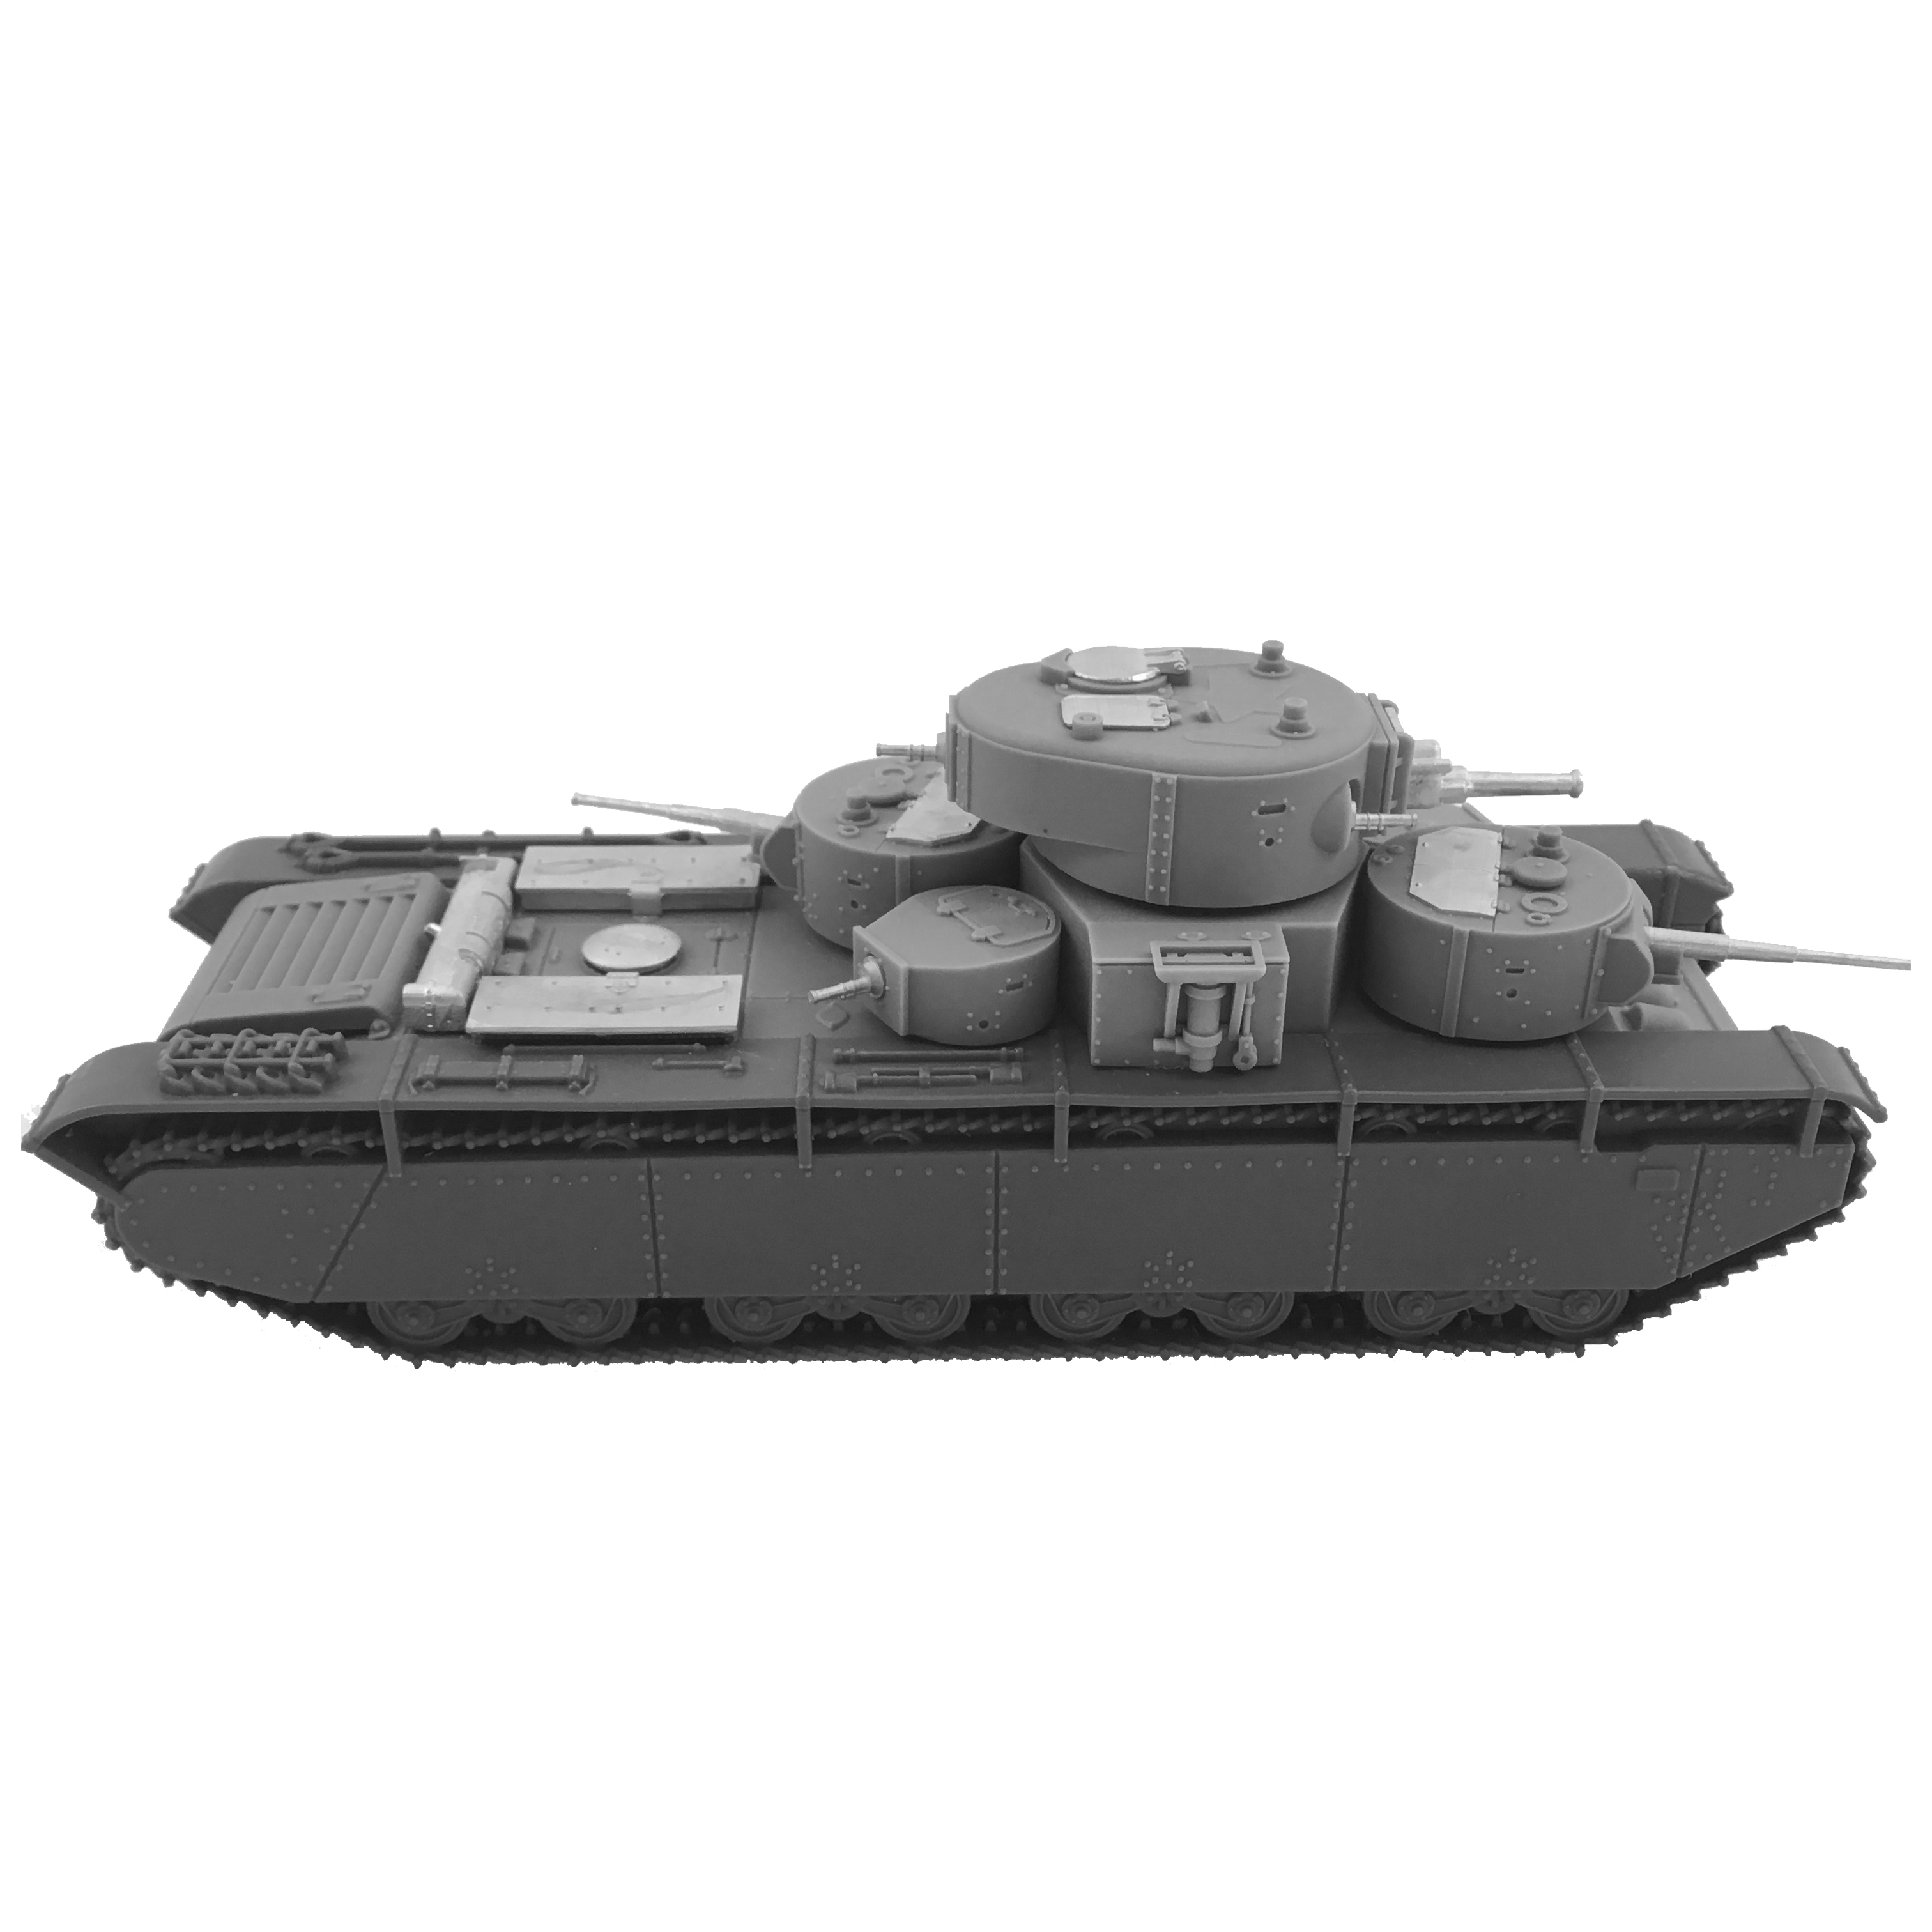 Trenchworx Tank Release – Russian T-35 in 28mm